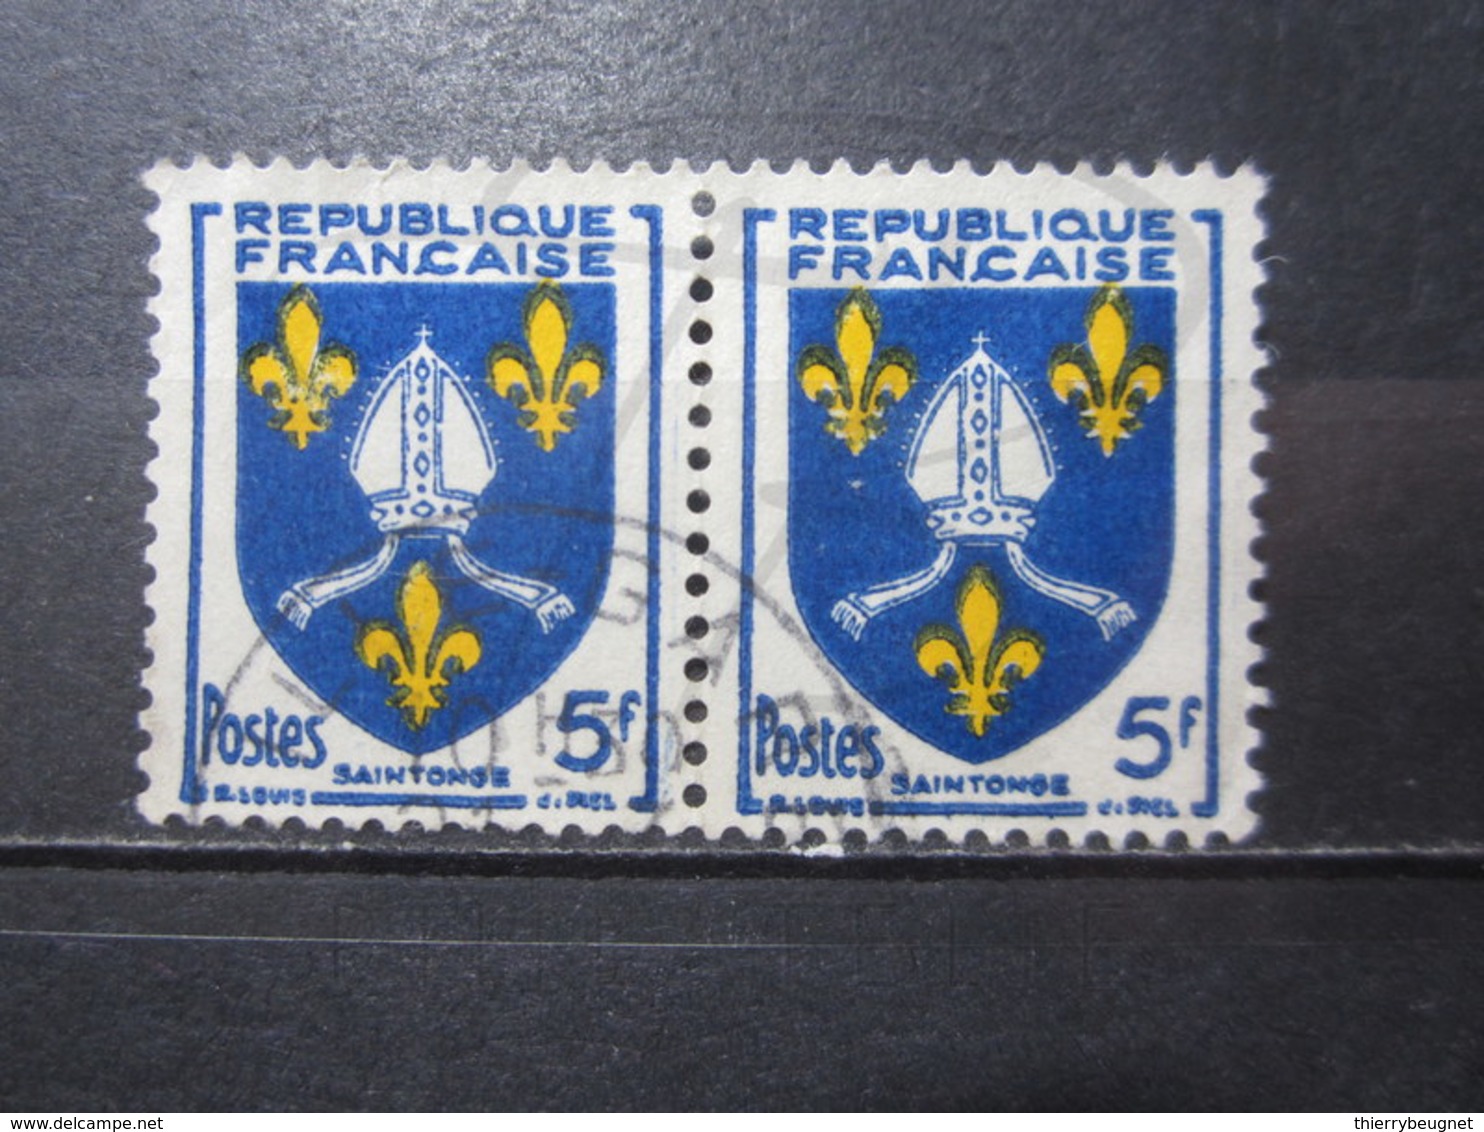 VEND BEAUX TIMBRES DE FRANCE N° 1005 EN PAIRE , JAUNE DECALE !!! - Used Stamps